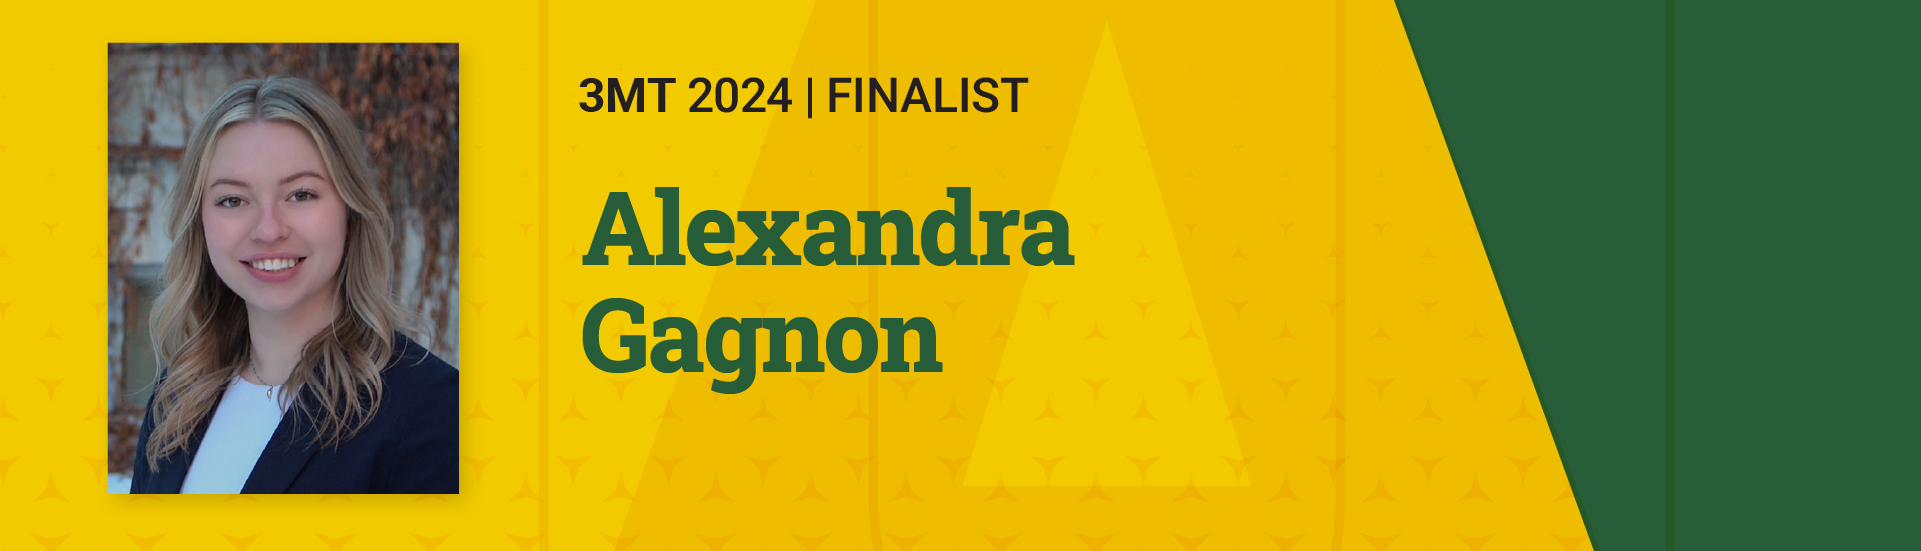 3MT 2024 Finalist Alexandra Gagnon